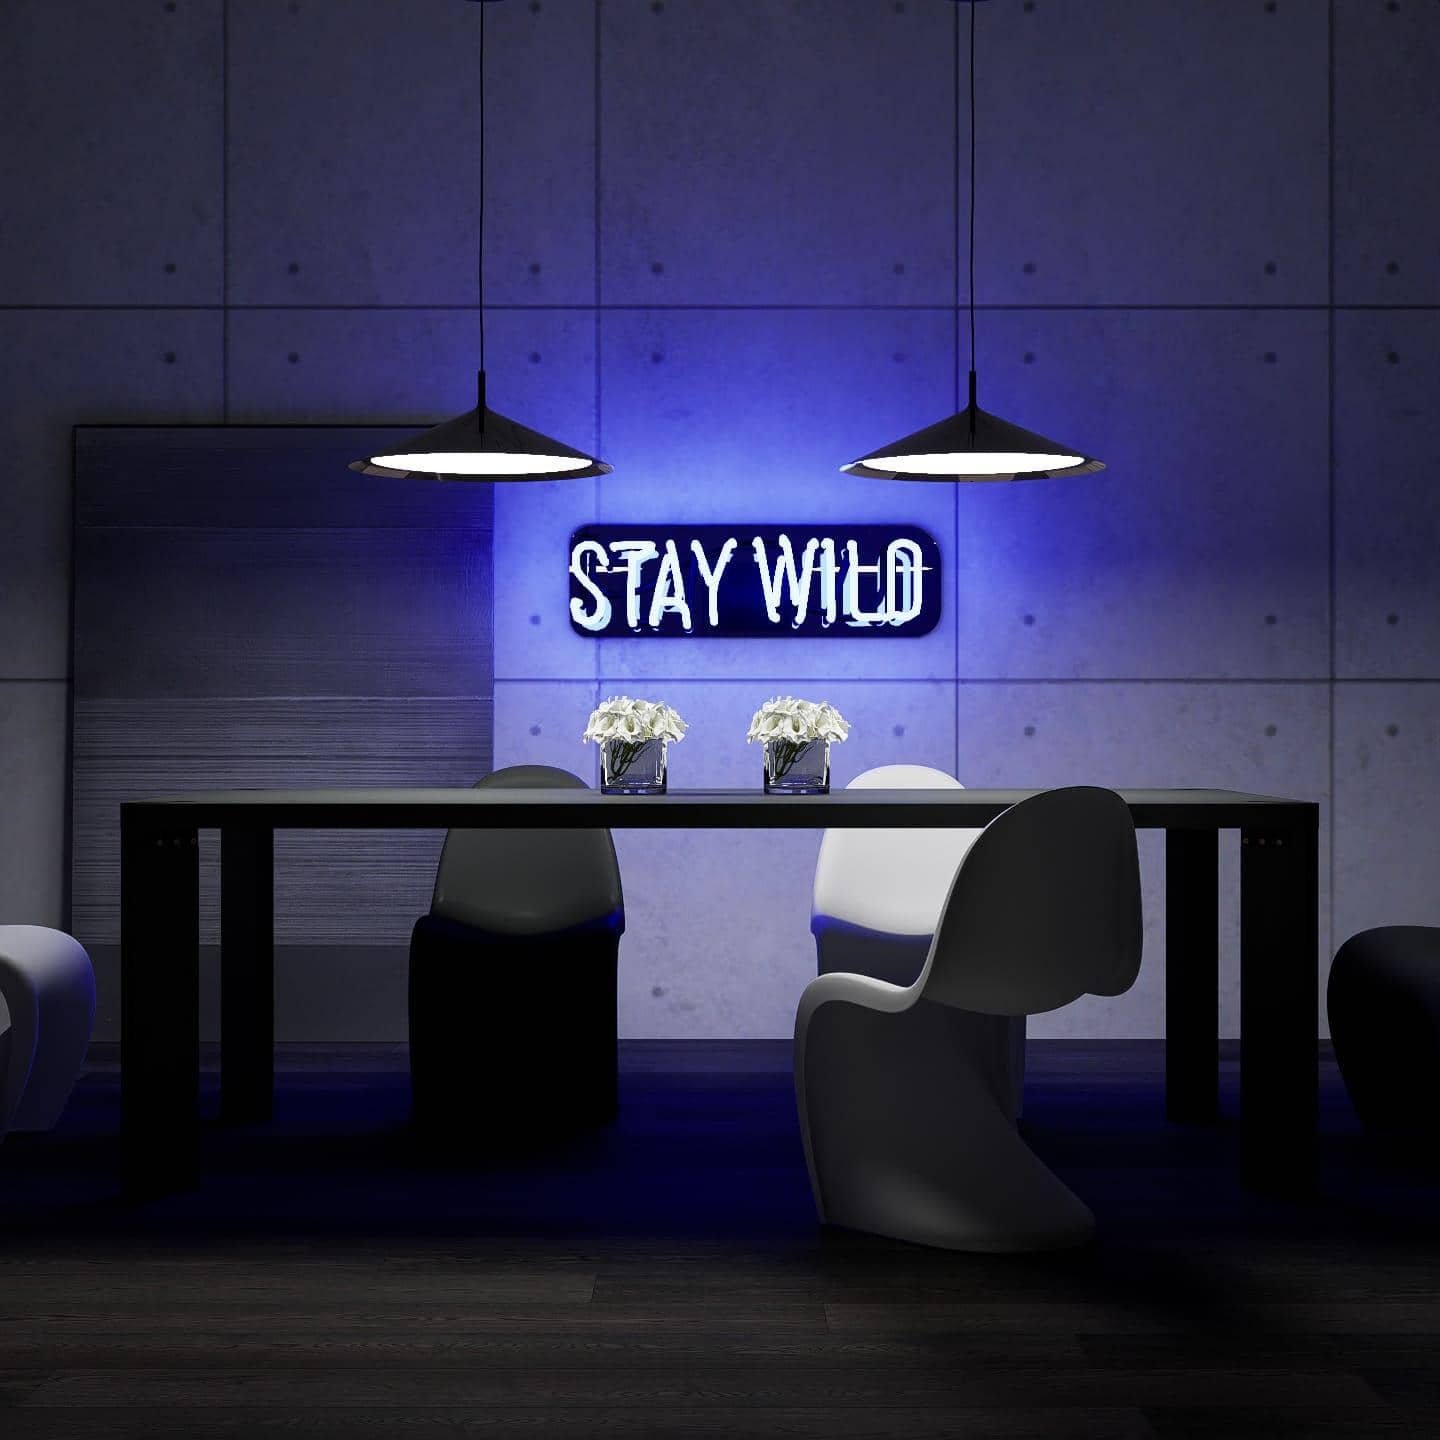 Stay wild - NeonsignLife